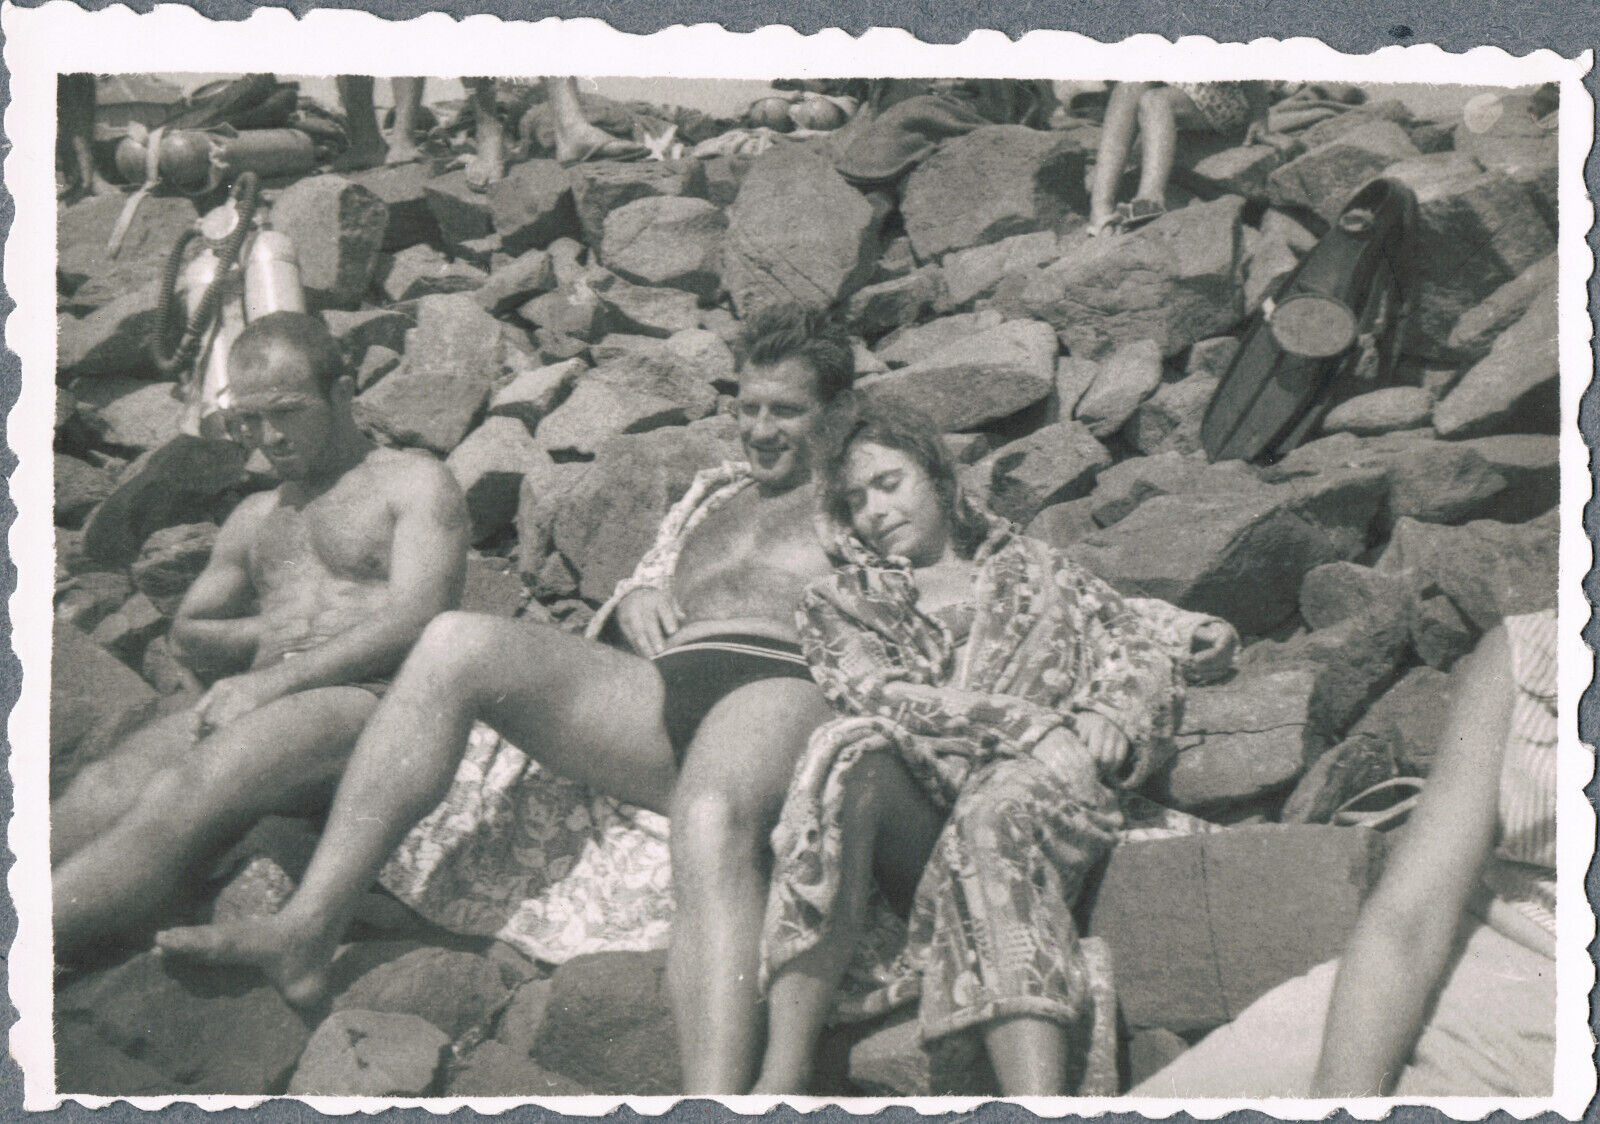 1950s Affectionate Men Trunks Bulge Pretty Women Bikini Beach Gay int Vint Photo